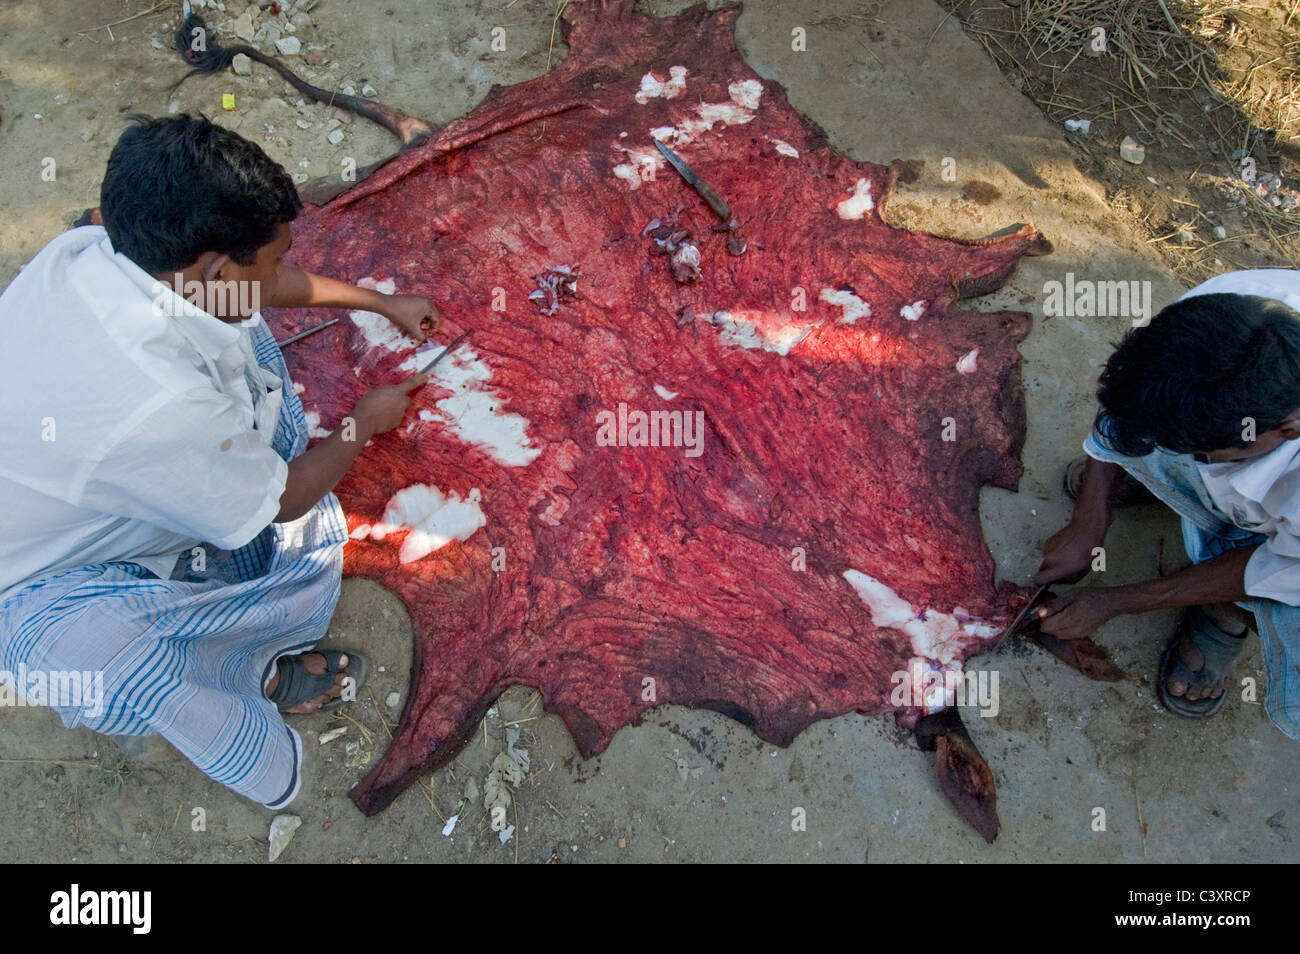 Men work on an animal skin before the Eid - ul - Azha holiday (The Eid of sacrifice). Stock Photo